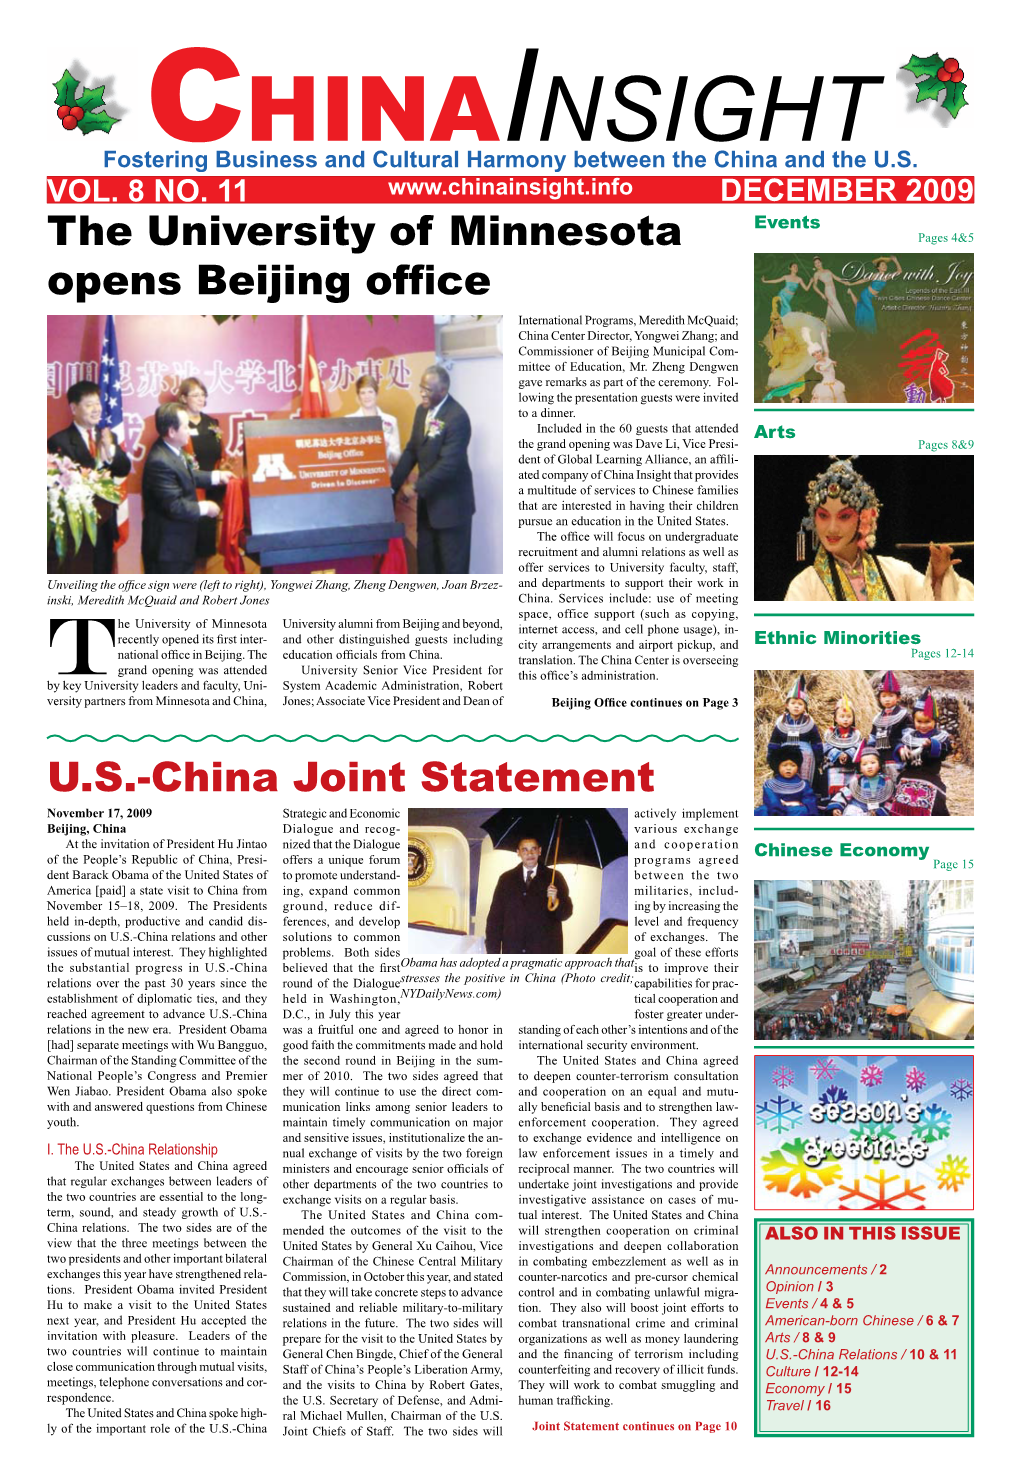 The University of Minnesota Opens Beijing Office US